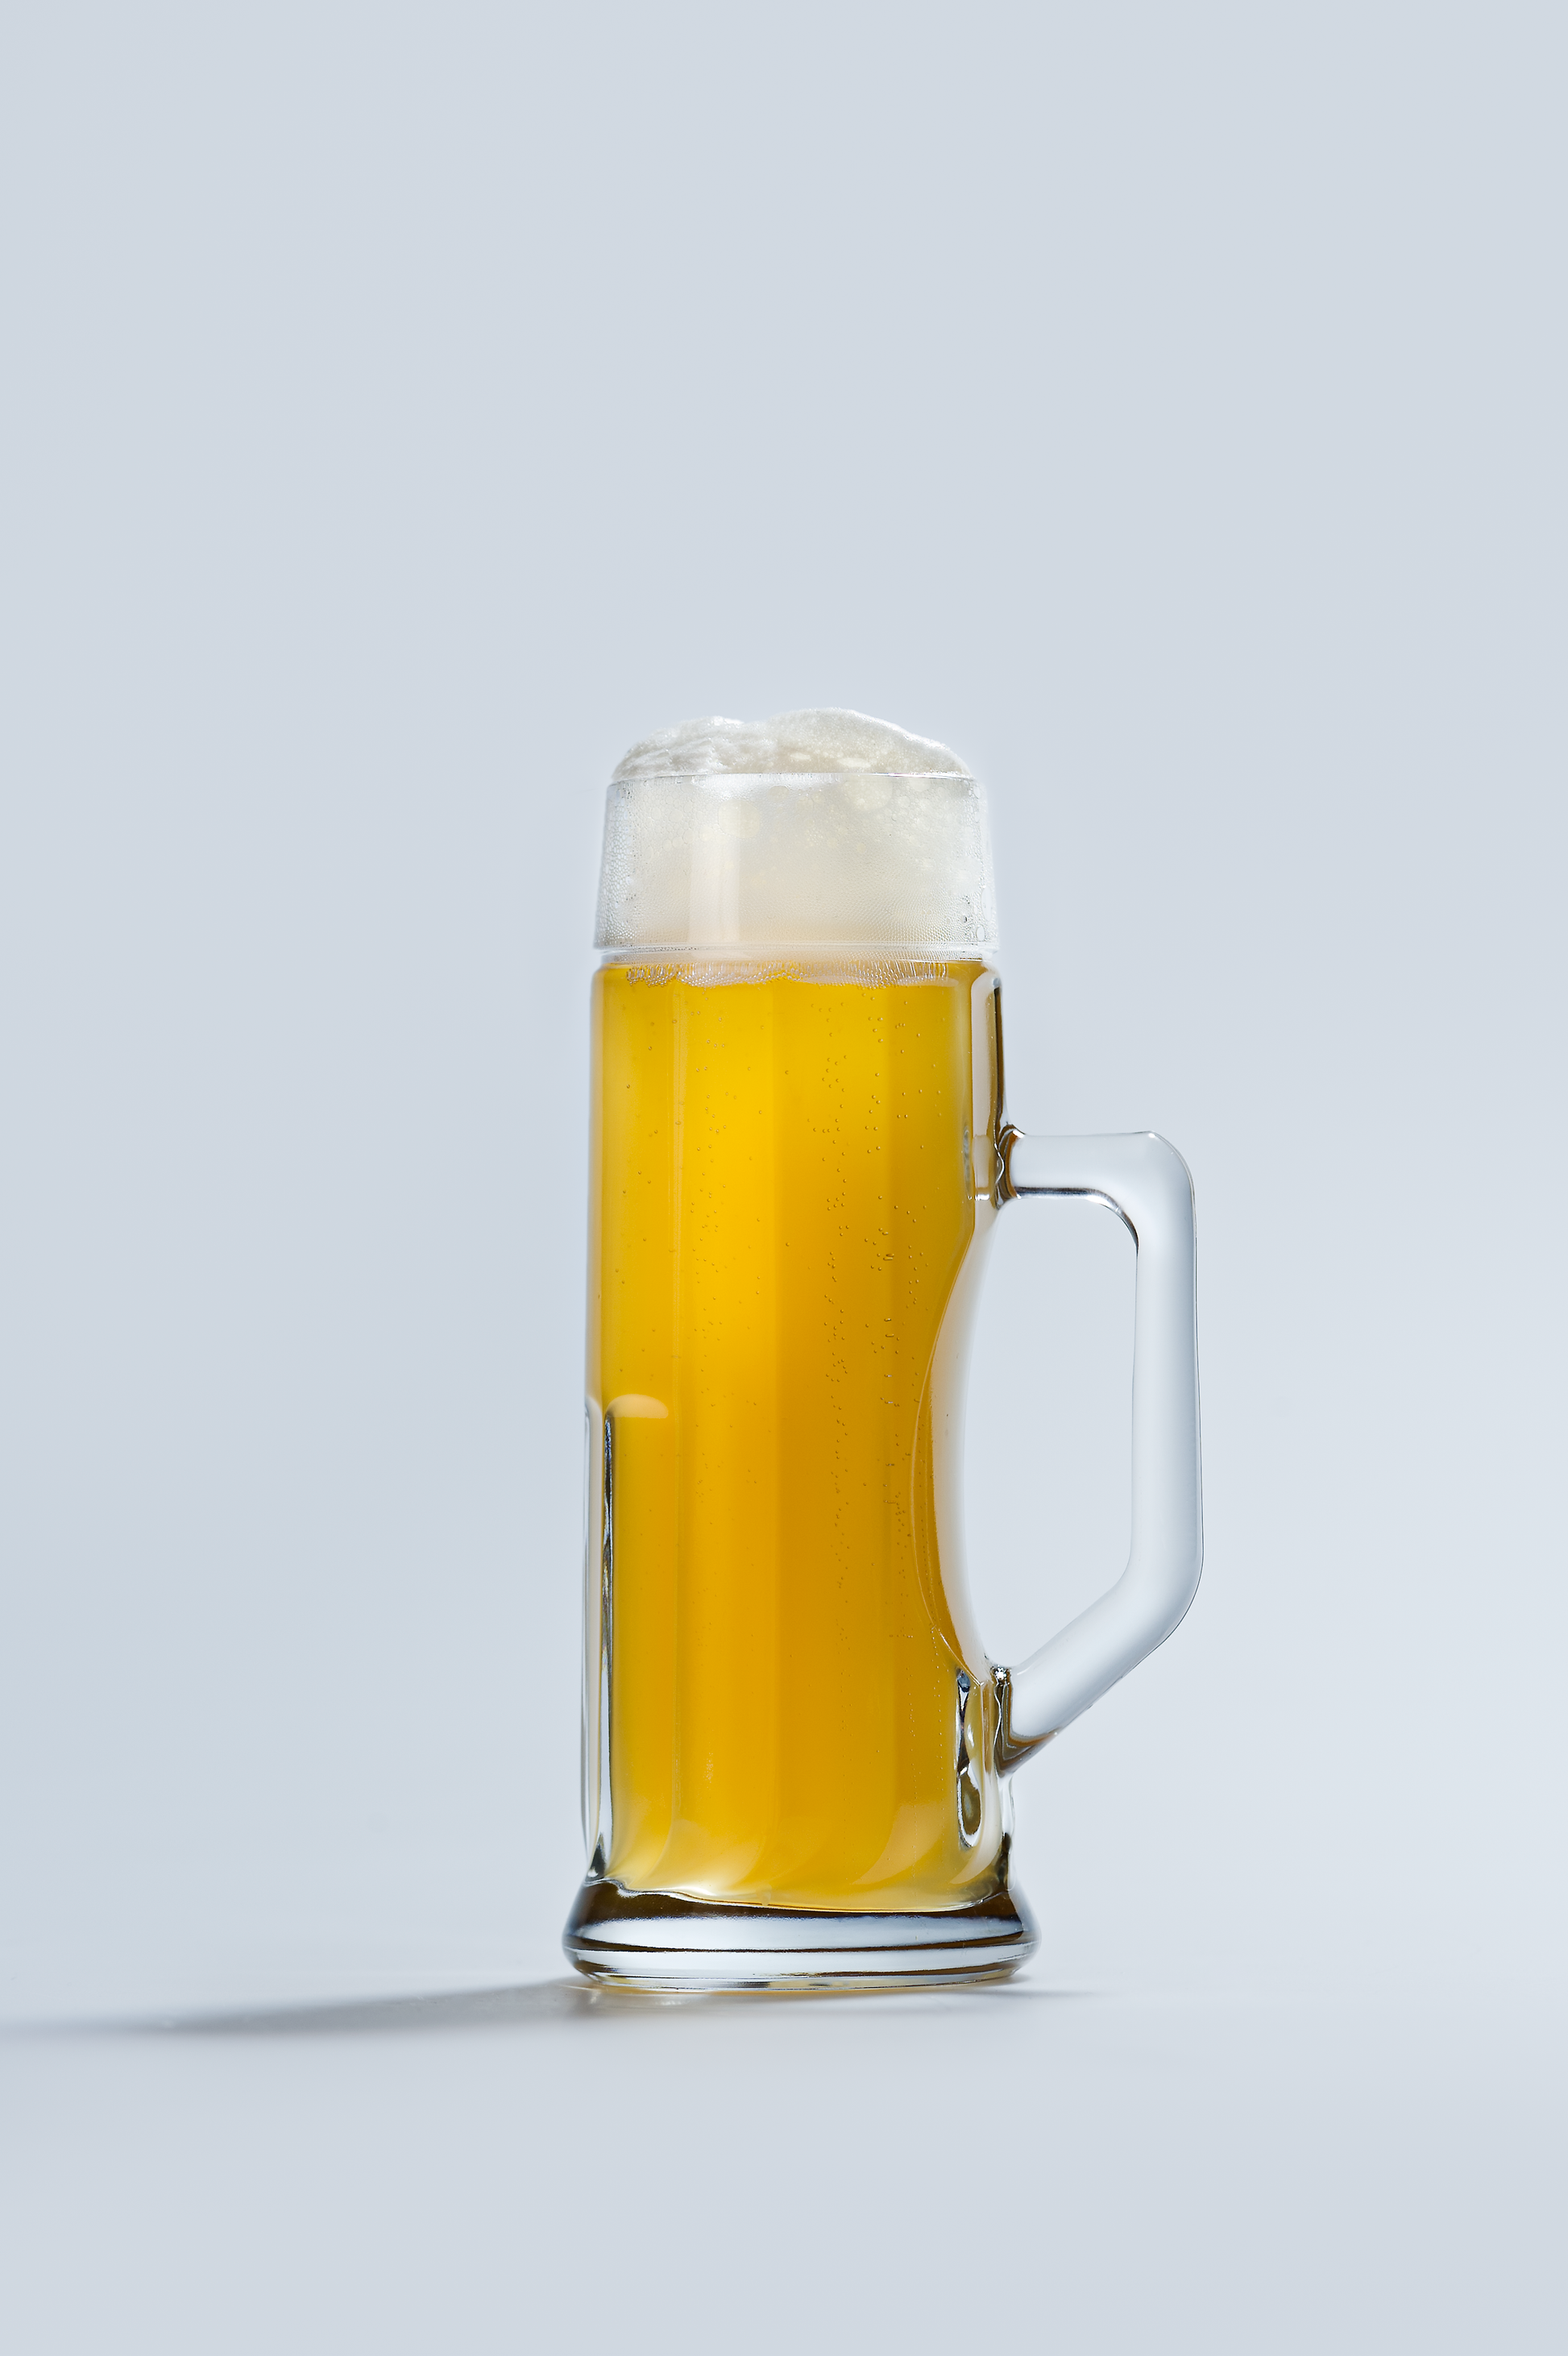 Polish Raised Bands Beer Mug - Premium glassware for beer and other beverages.